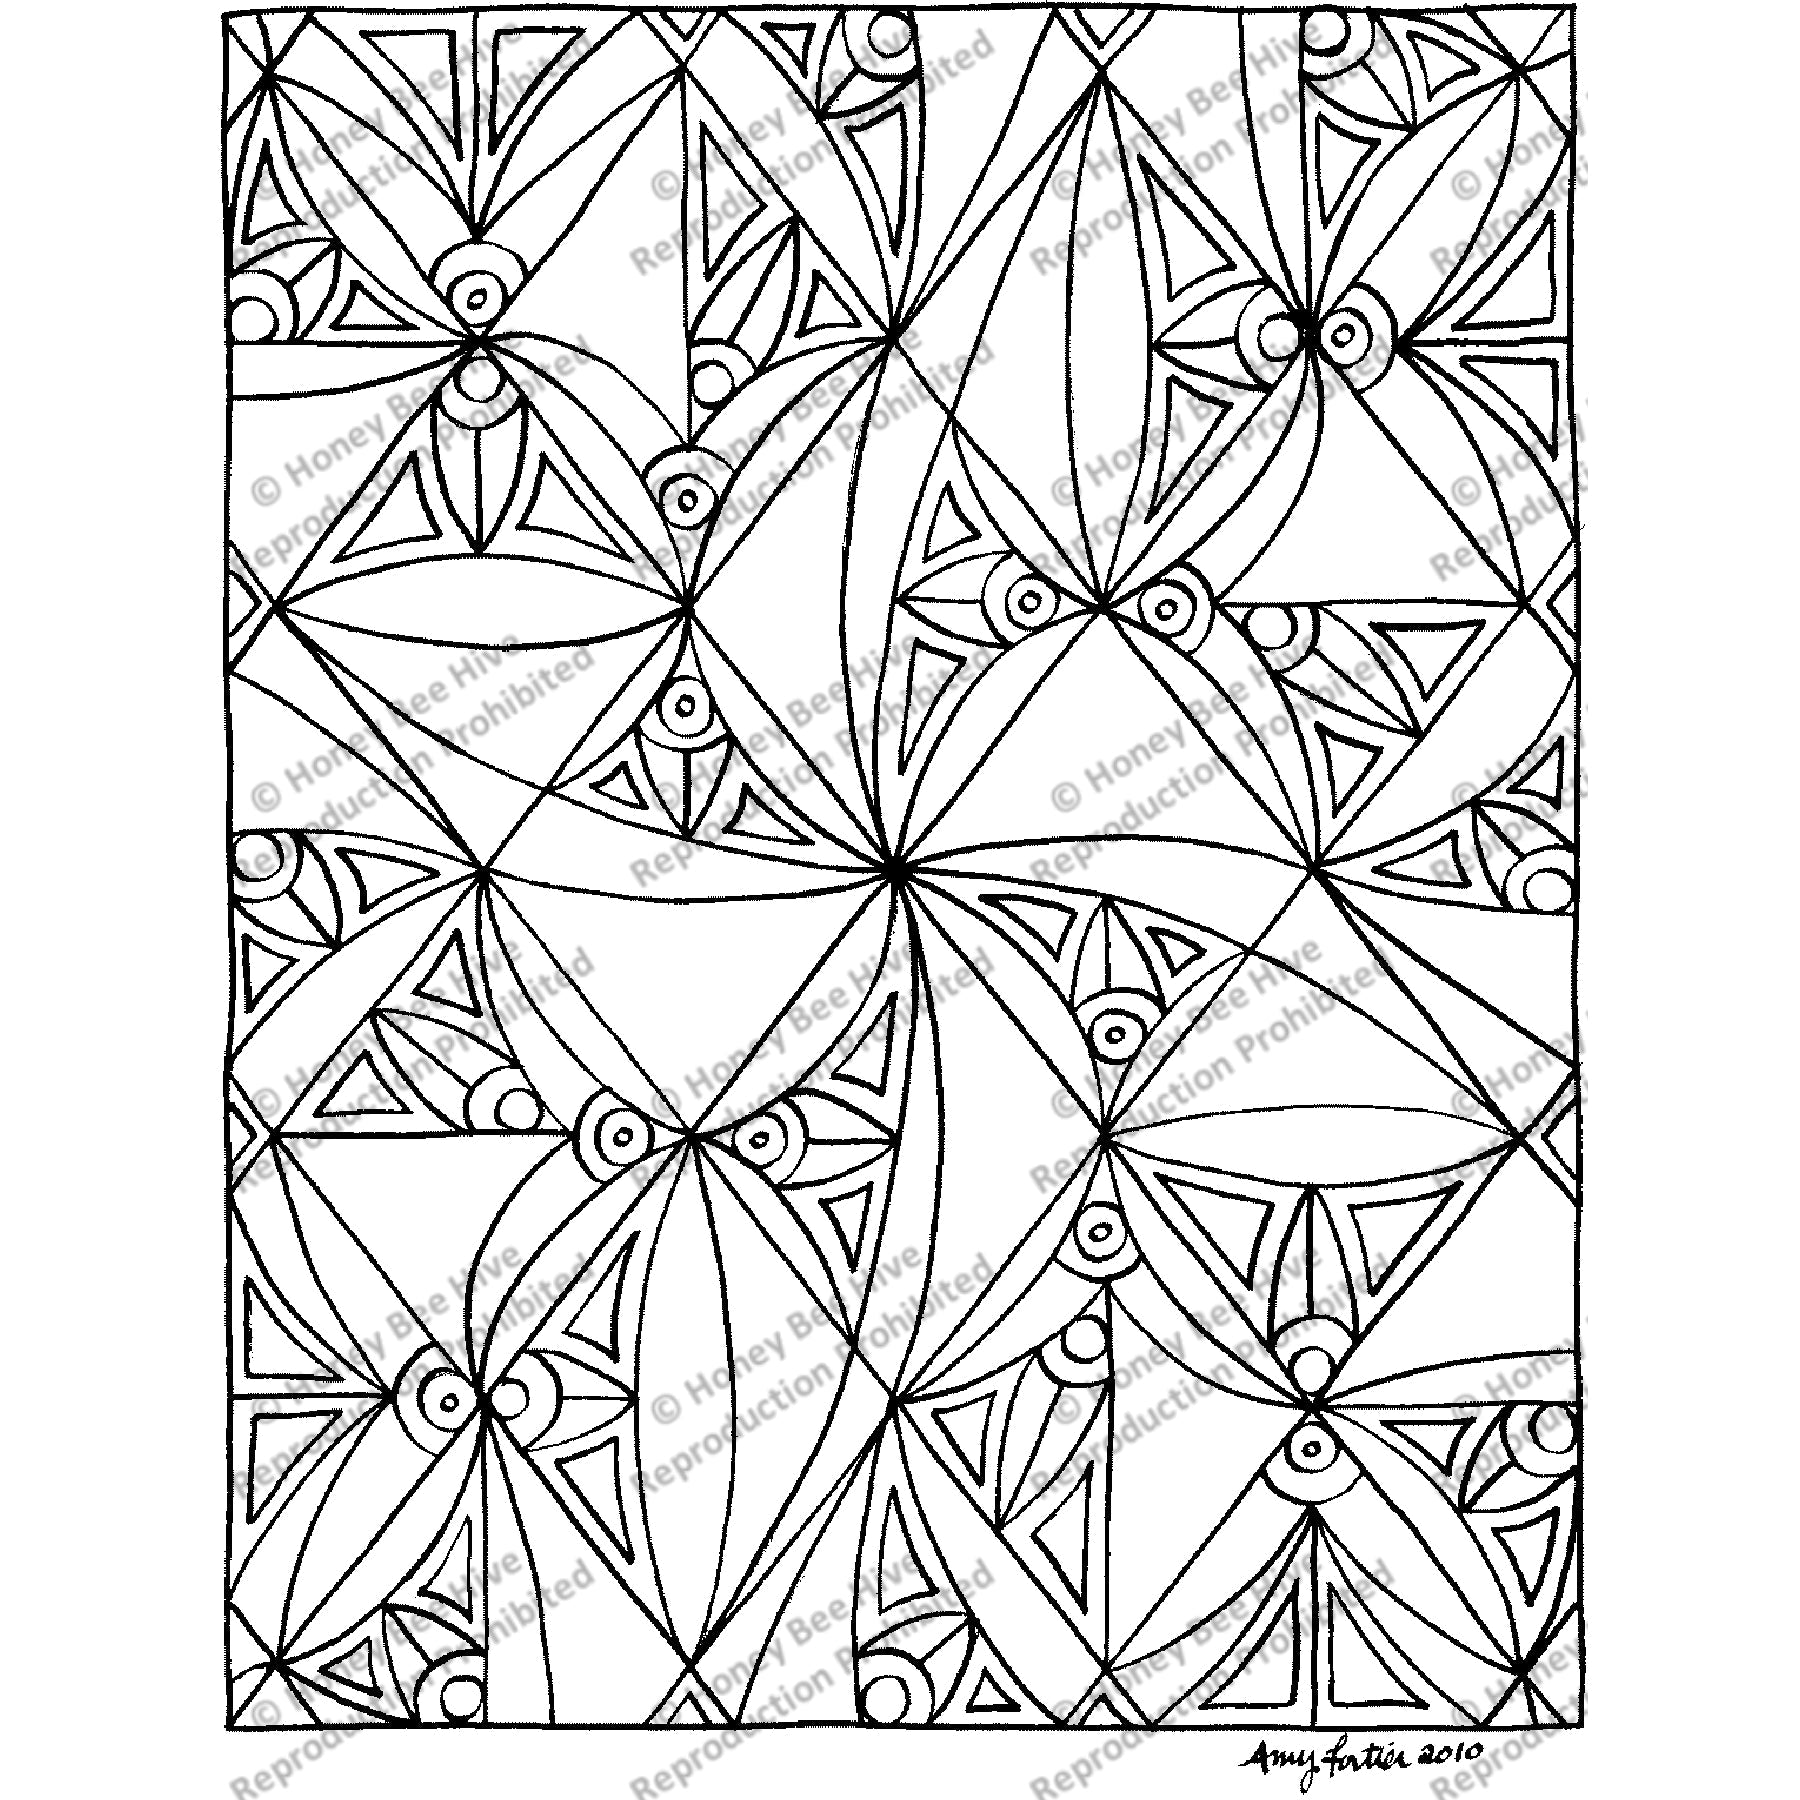 Toucan Play, rug hooking pattern